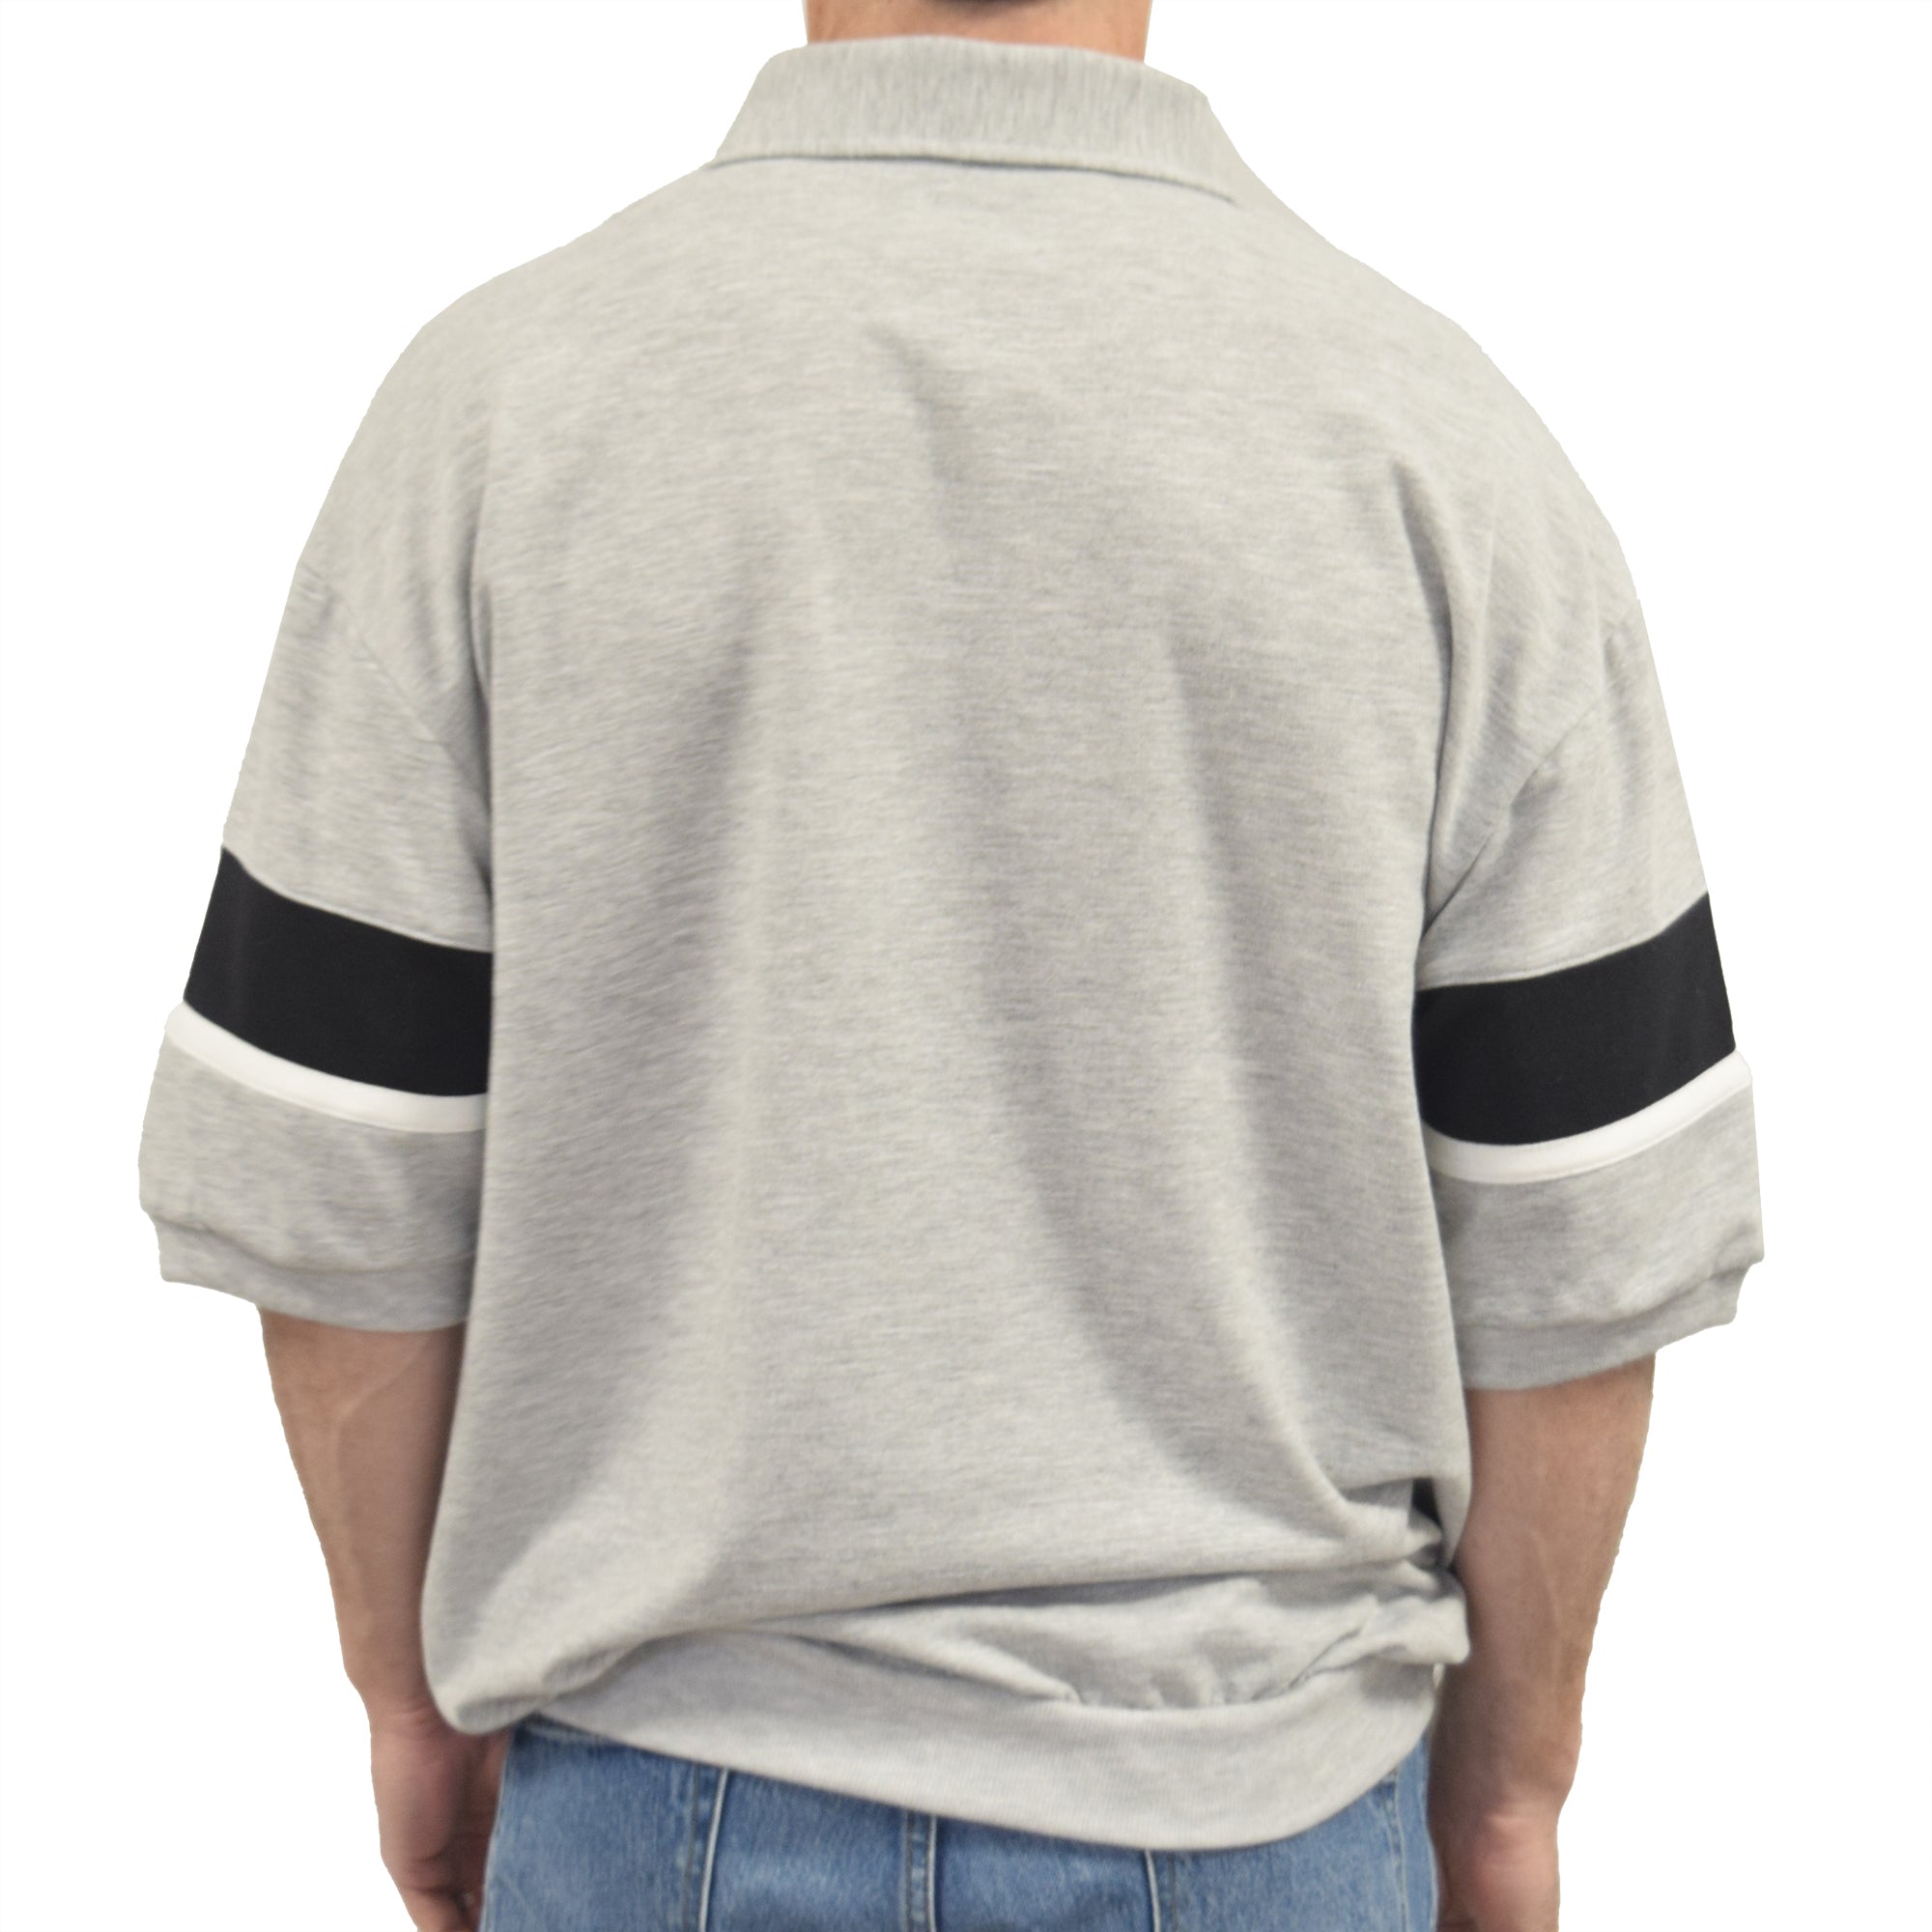 Classics by Palmland Two Tone Banded Bottom Shirt 6090-262B Grey